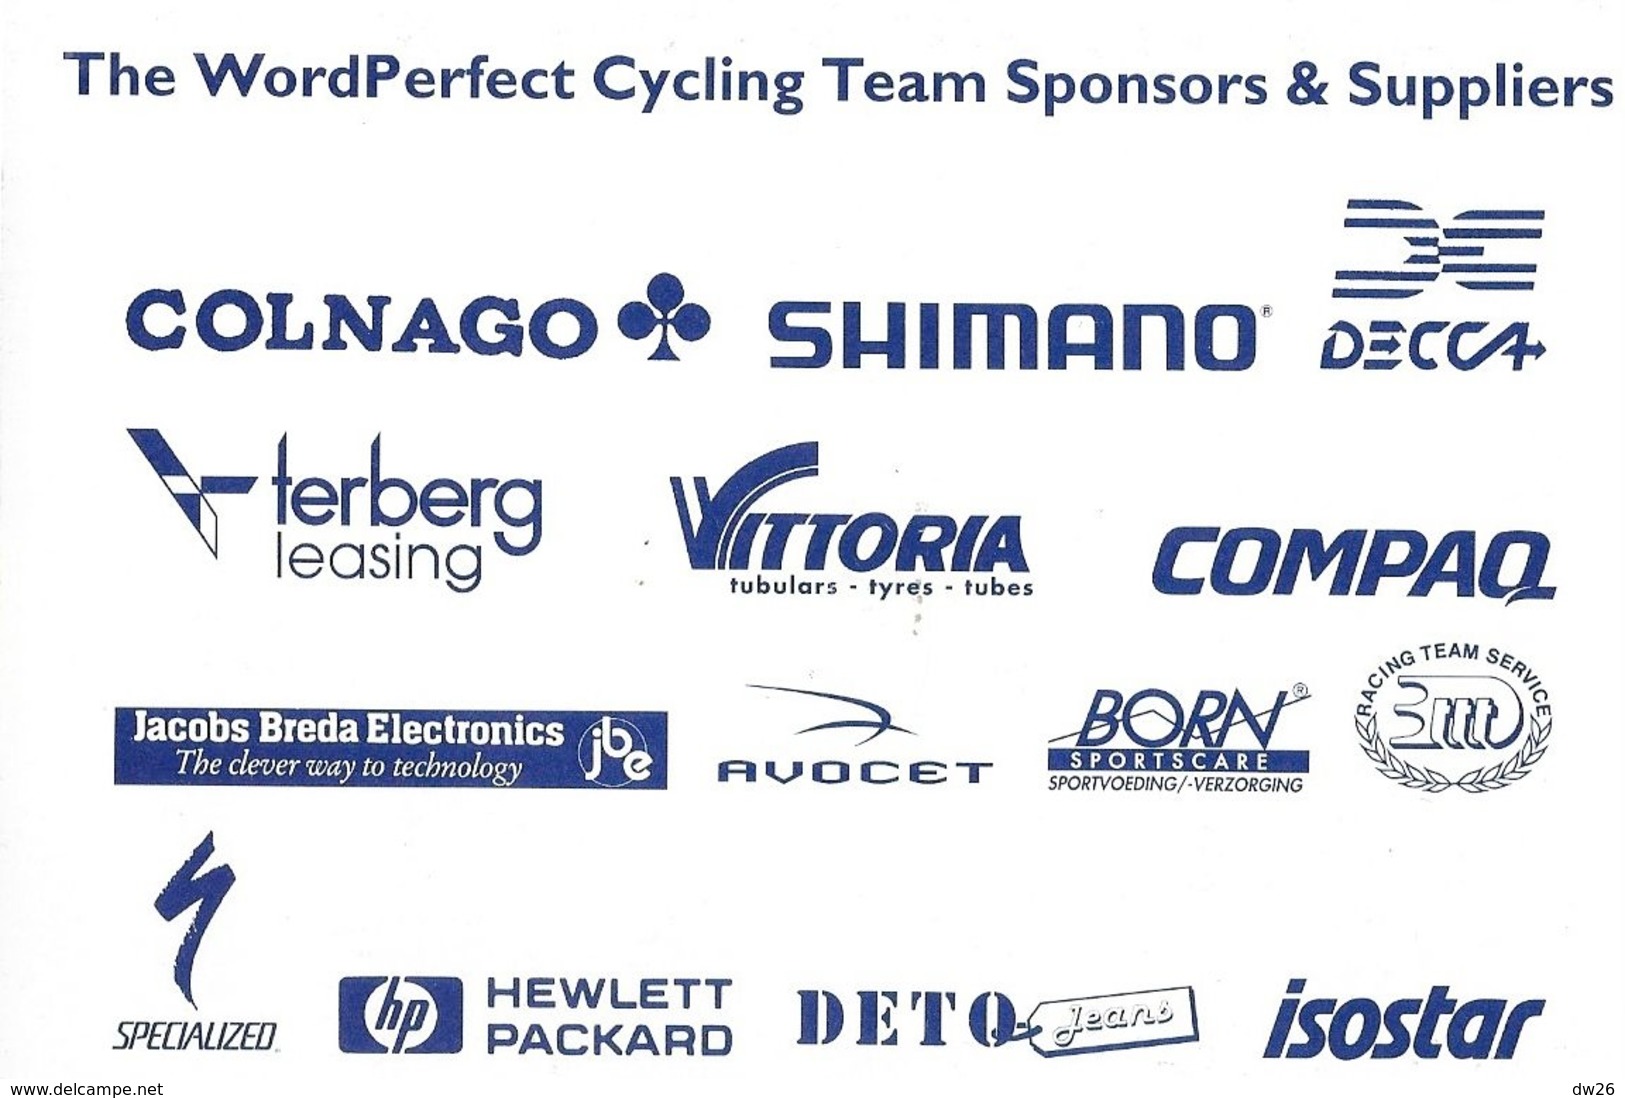 Cycliste: Atle Kvalsvoll, Equipe De Cyclisme Professionnel: Team Wordperfect Software, Norvège 1993 - Deportes